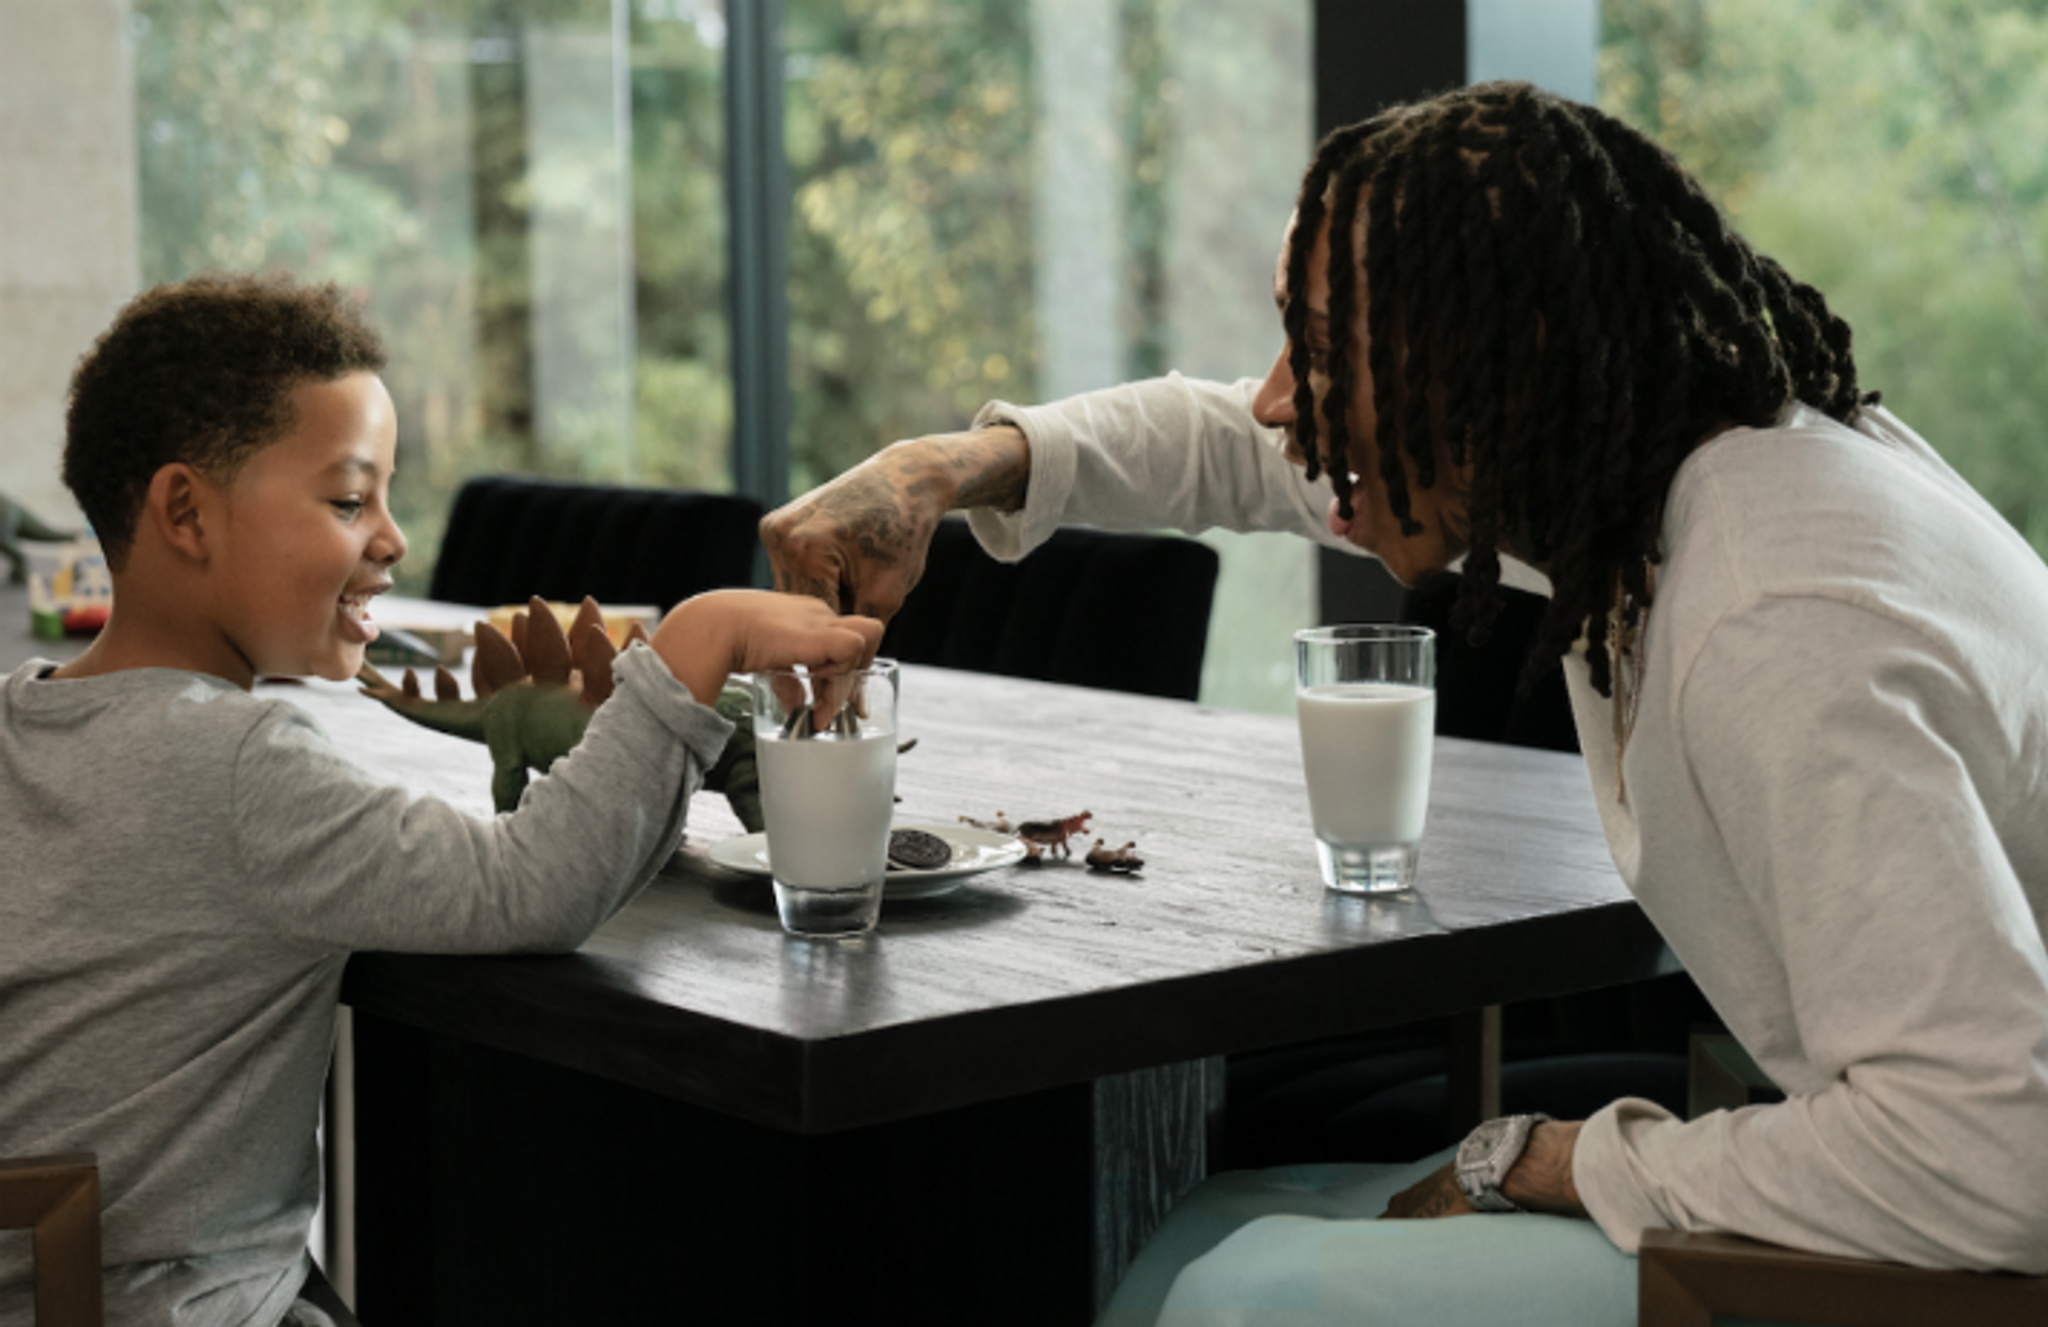 Oreo's Wiz Khalifa ad is a celebration of modern dads